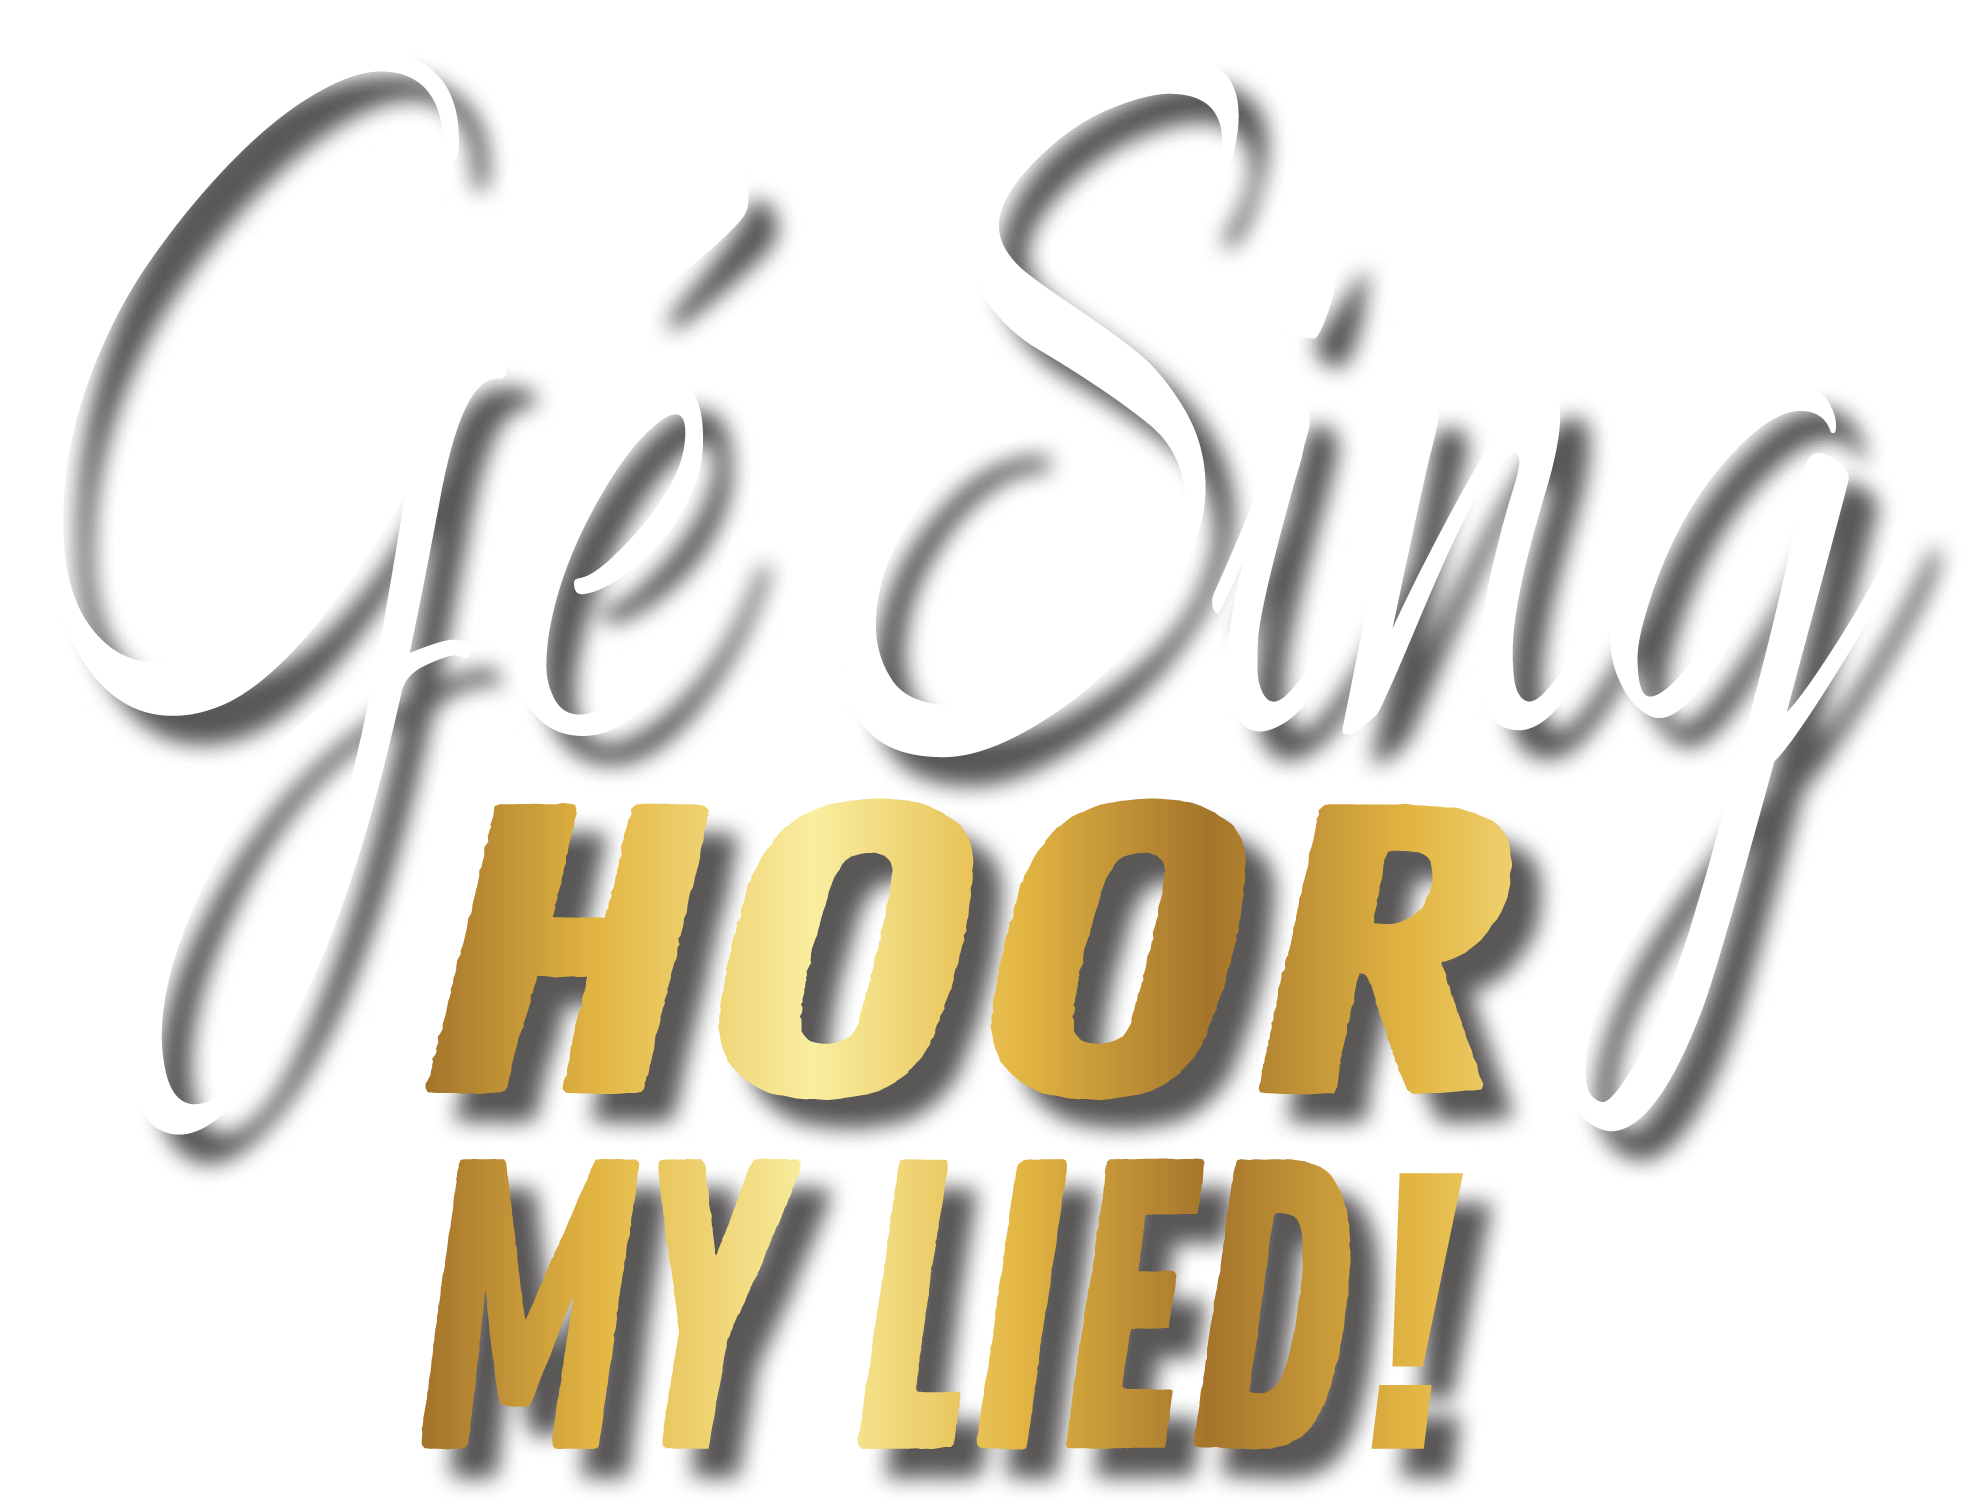 Gé Sing: Hoor my Lied!